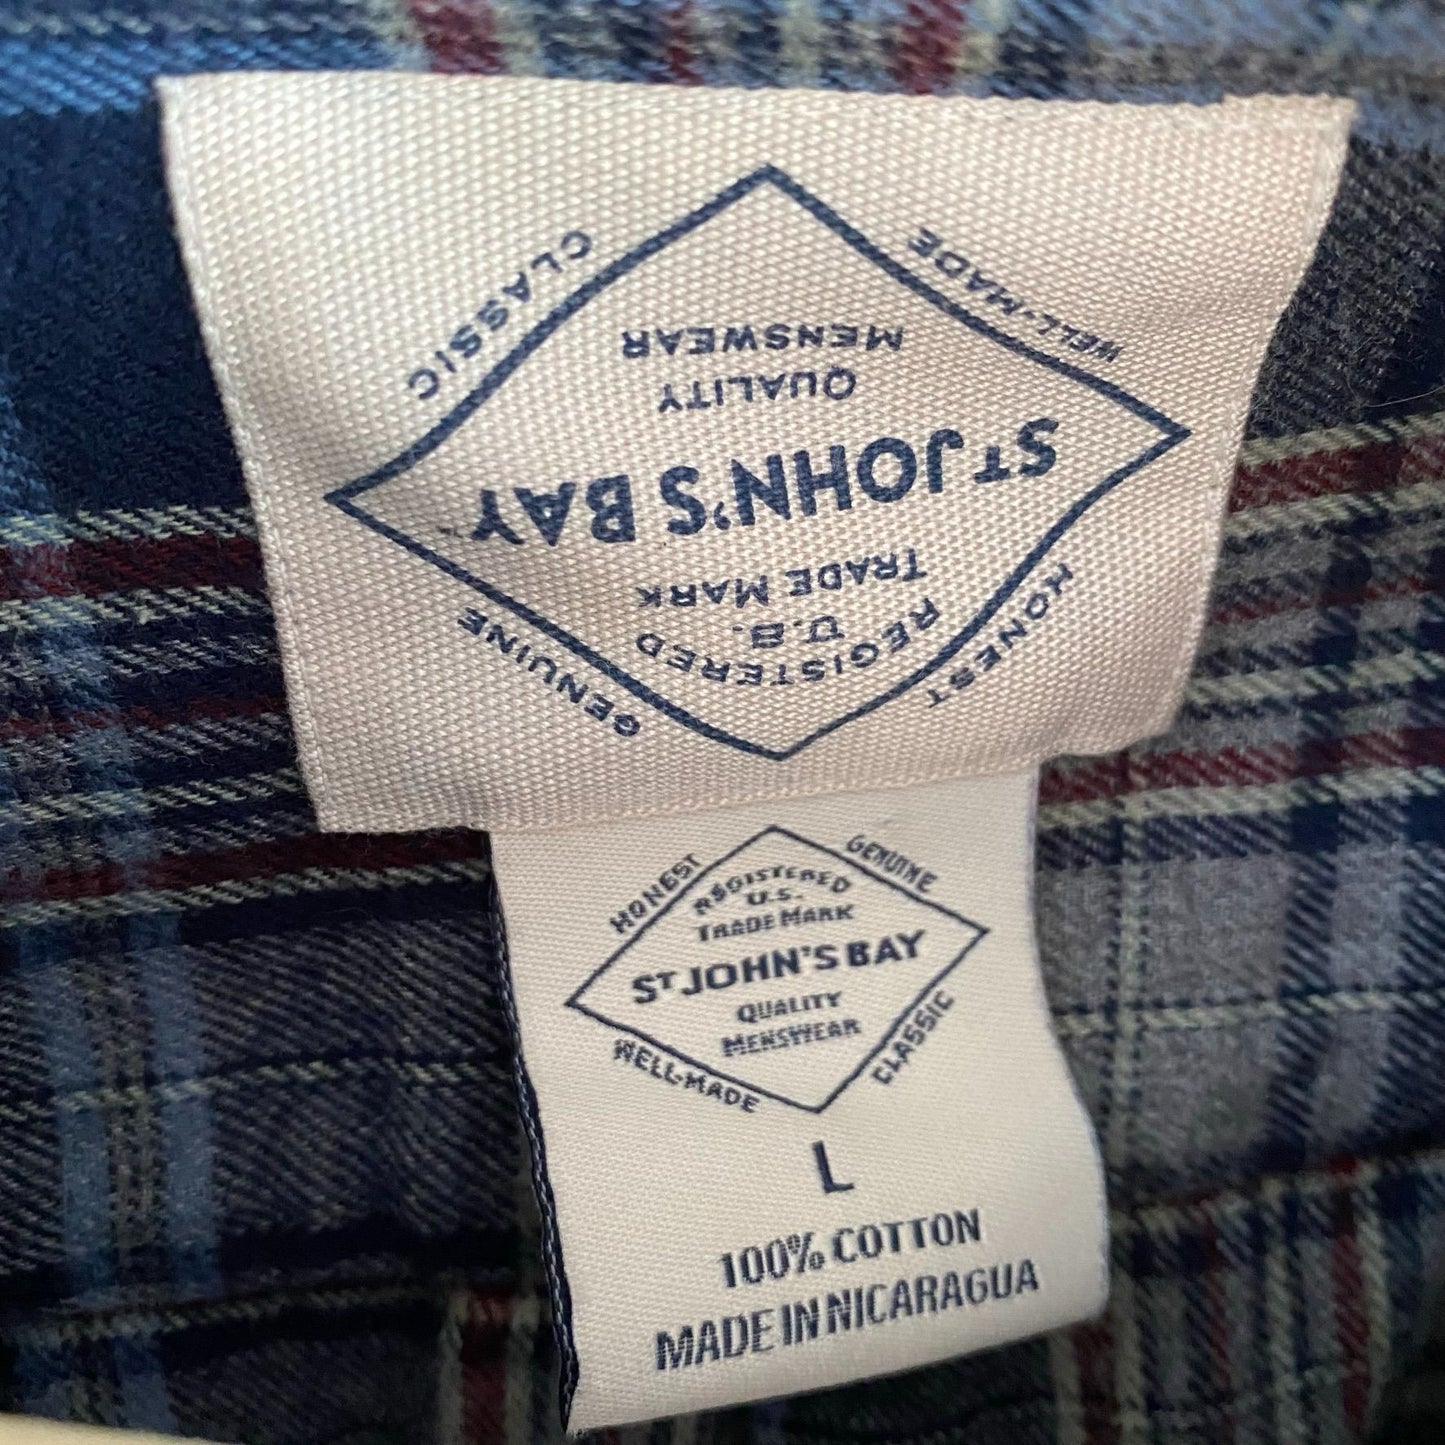 St. John's Bay Plaid Flannel Shirt